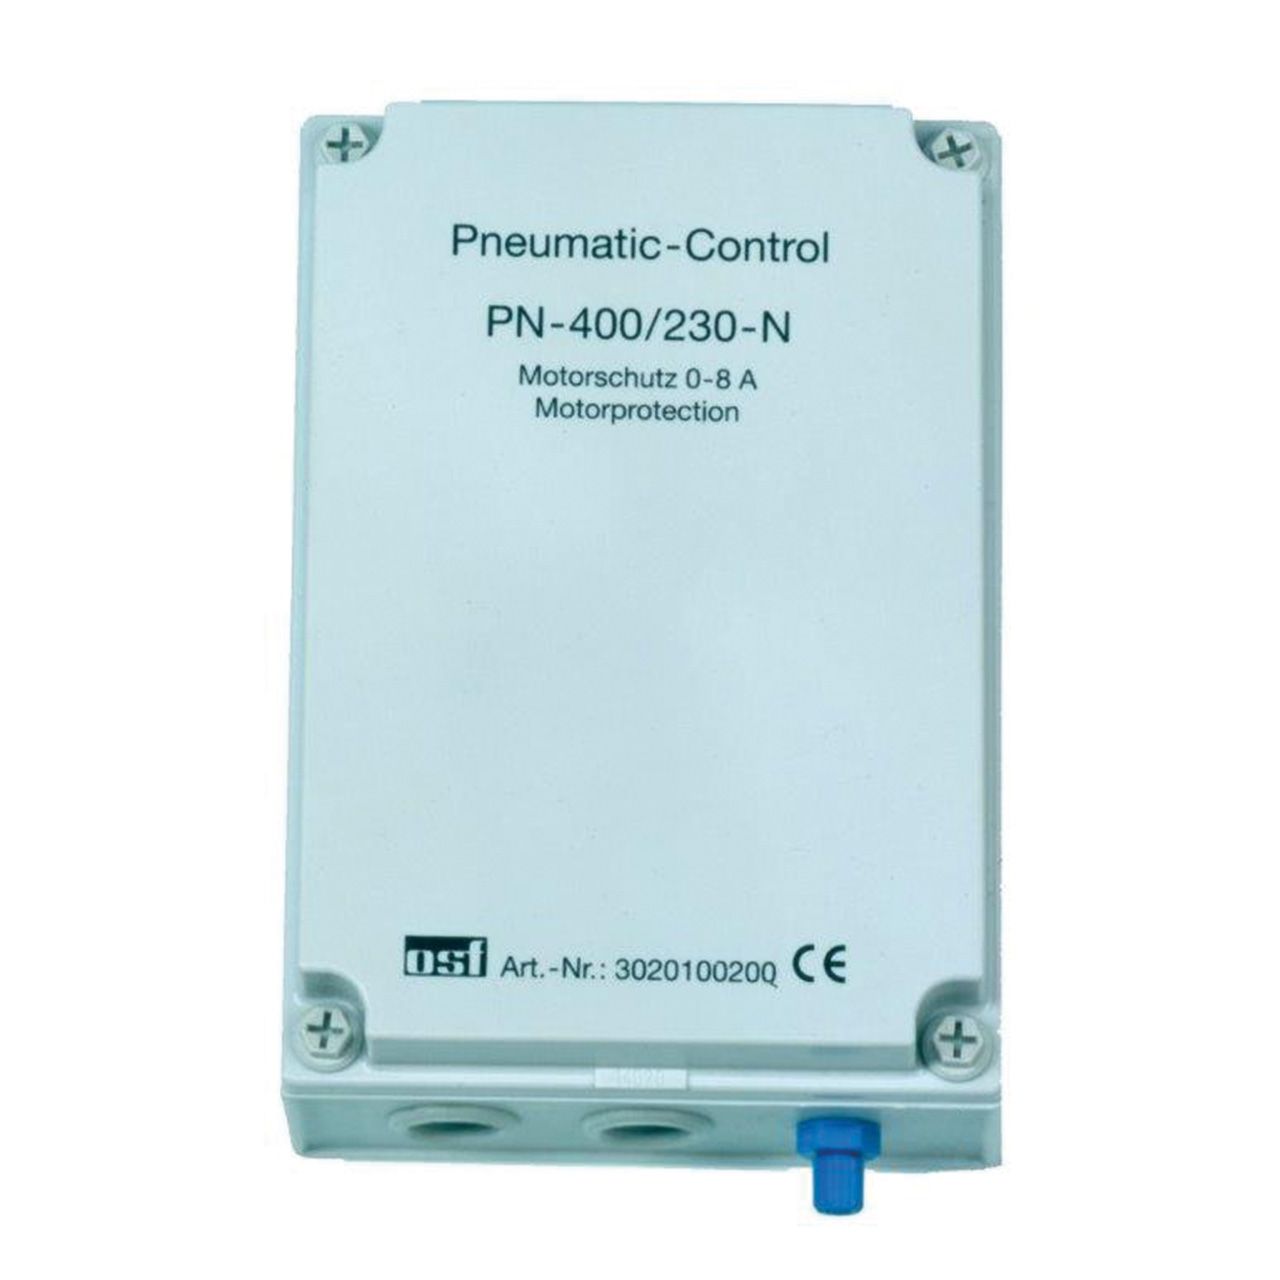 osf Pneumatic-Control PN-400/230-N